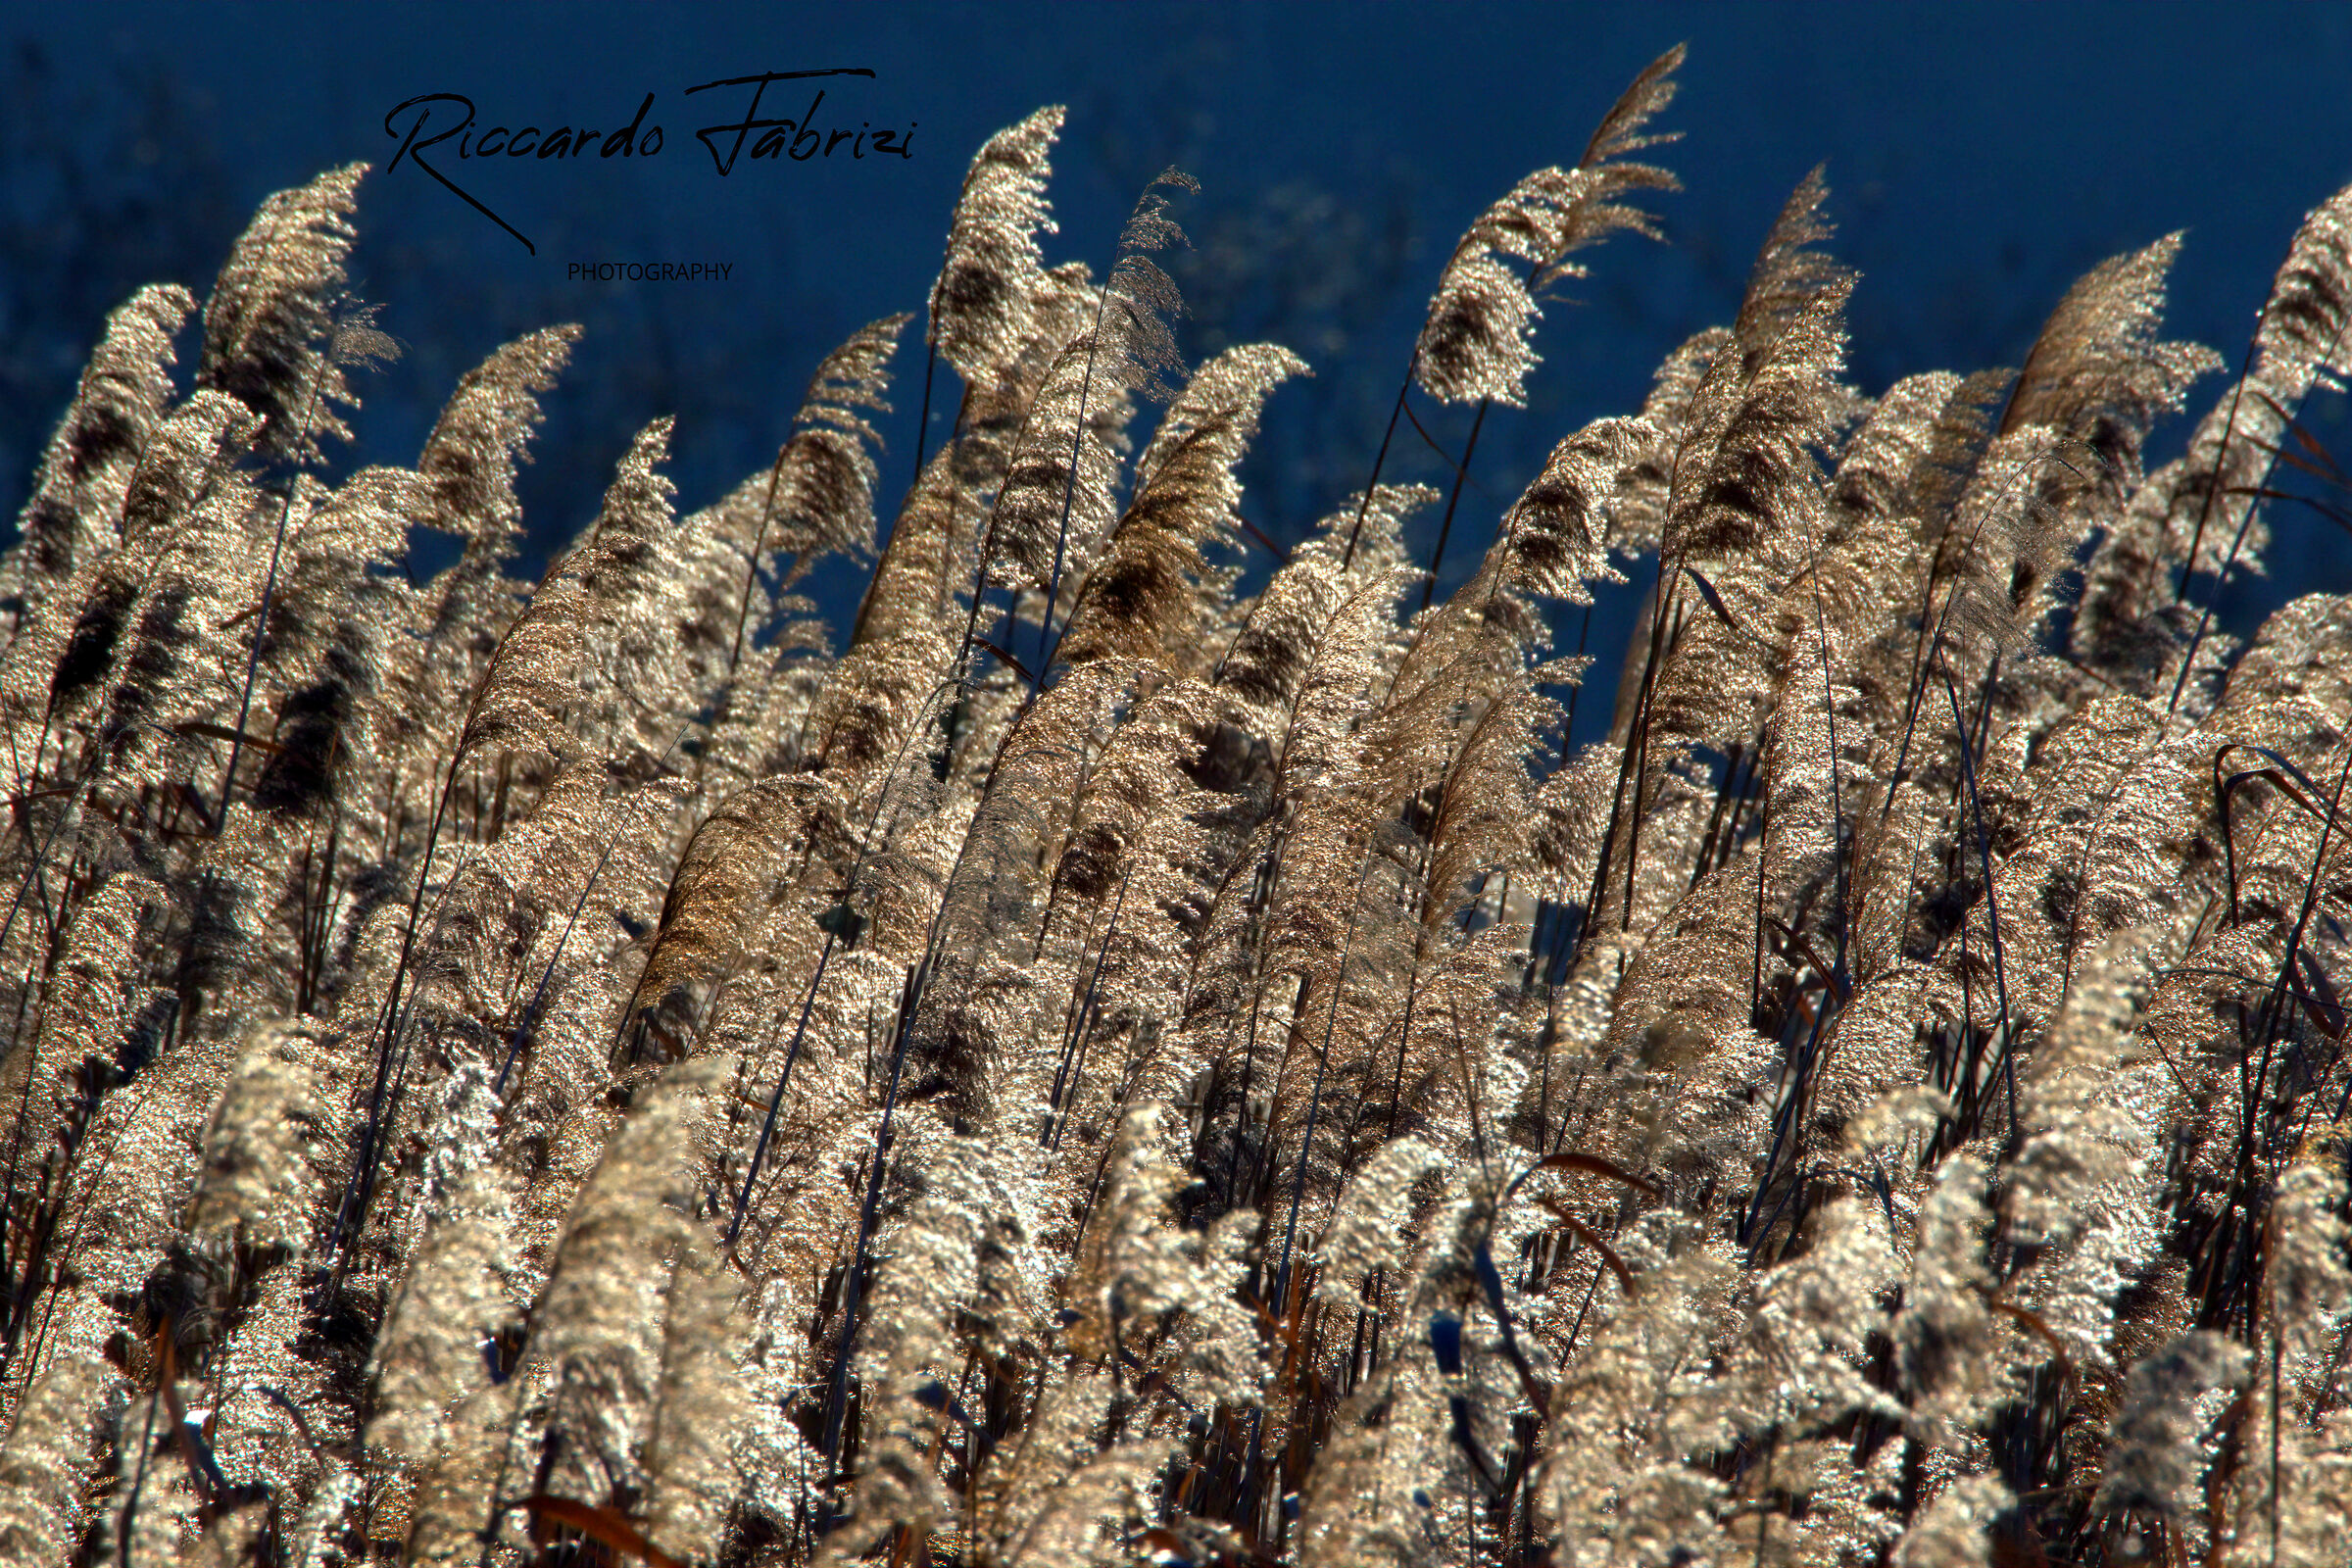 The magic of reeds...